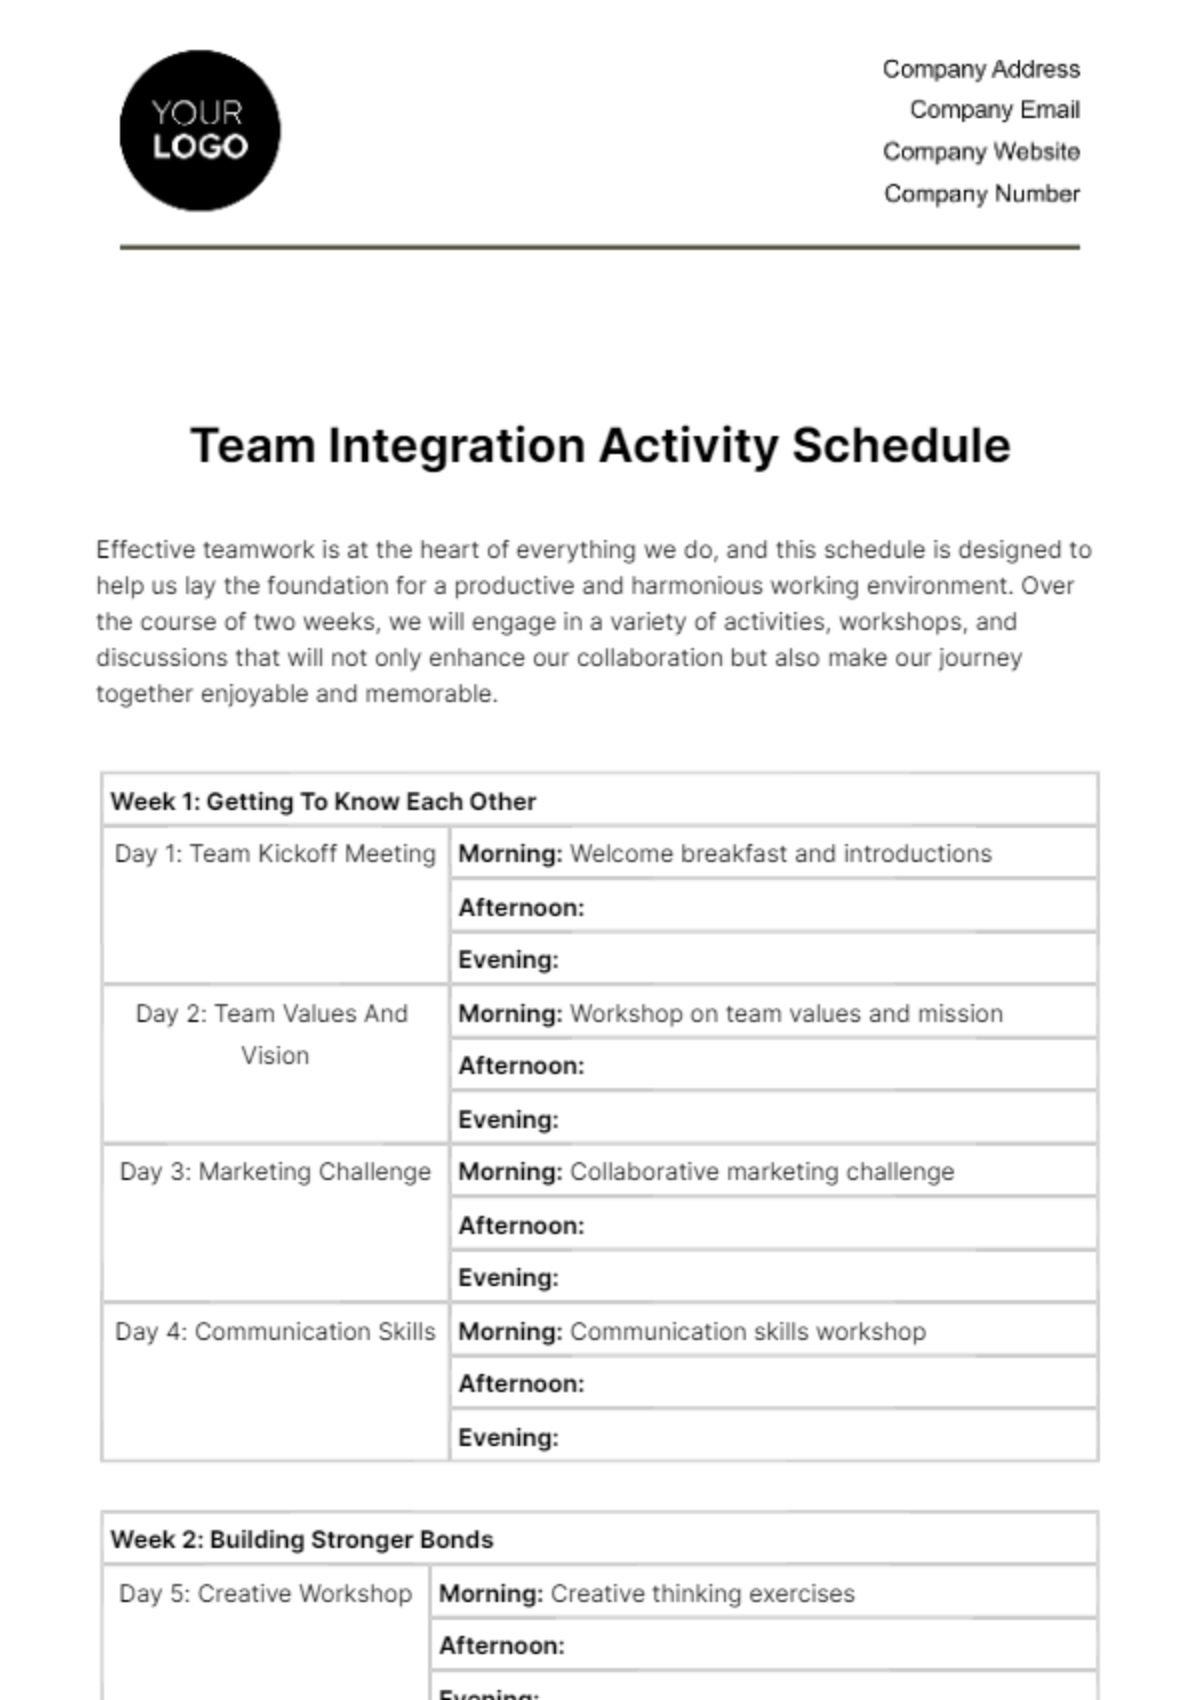 Team Integration Activity Schedule HR Template